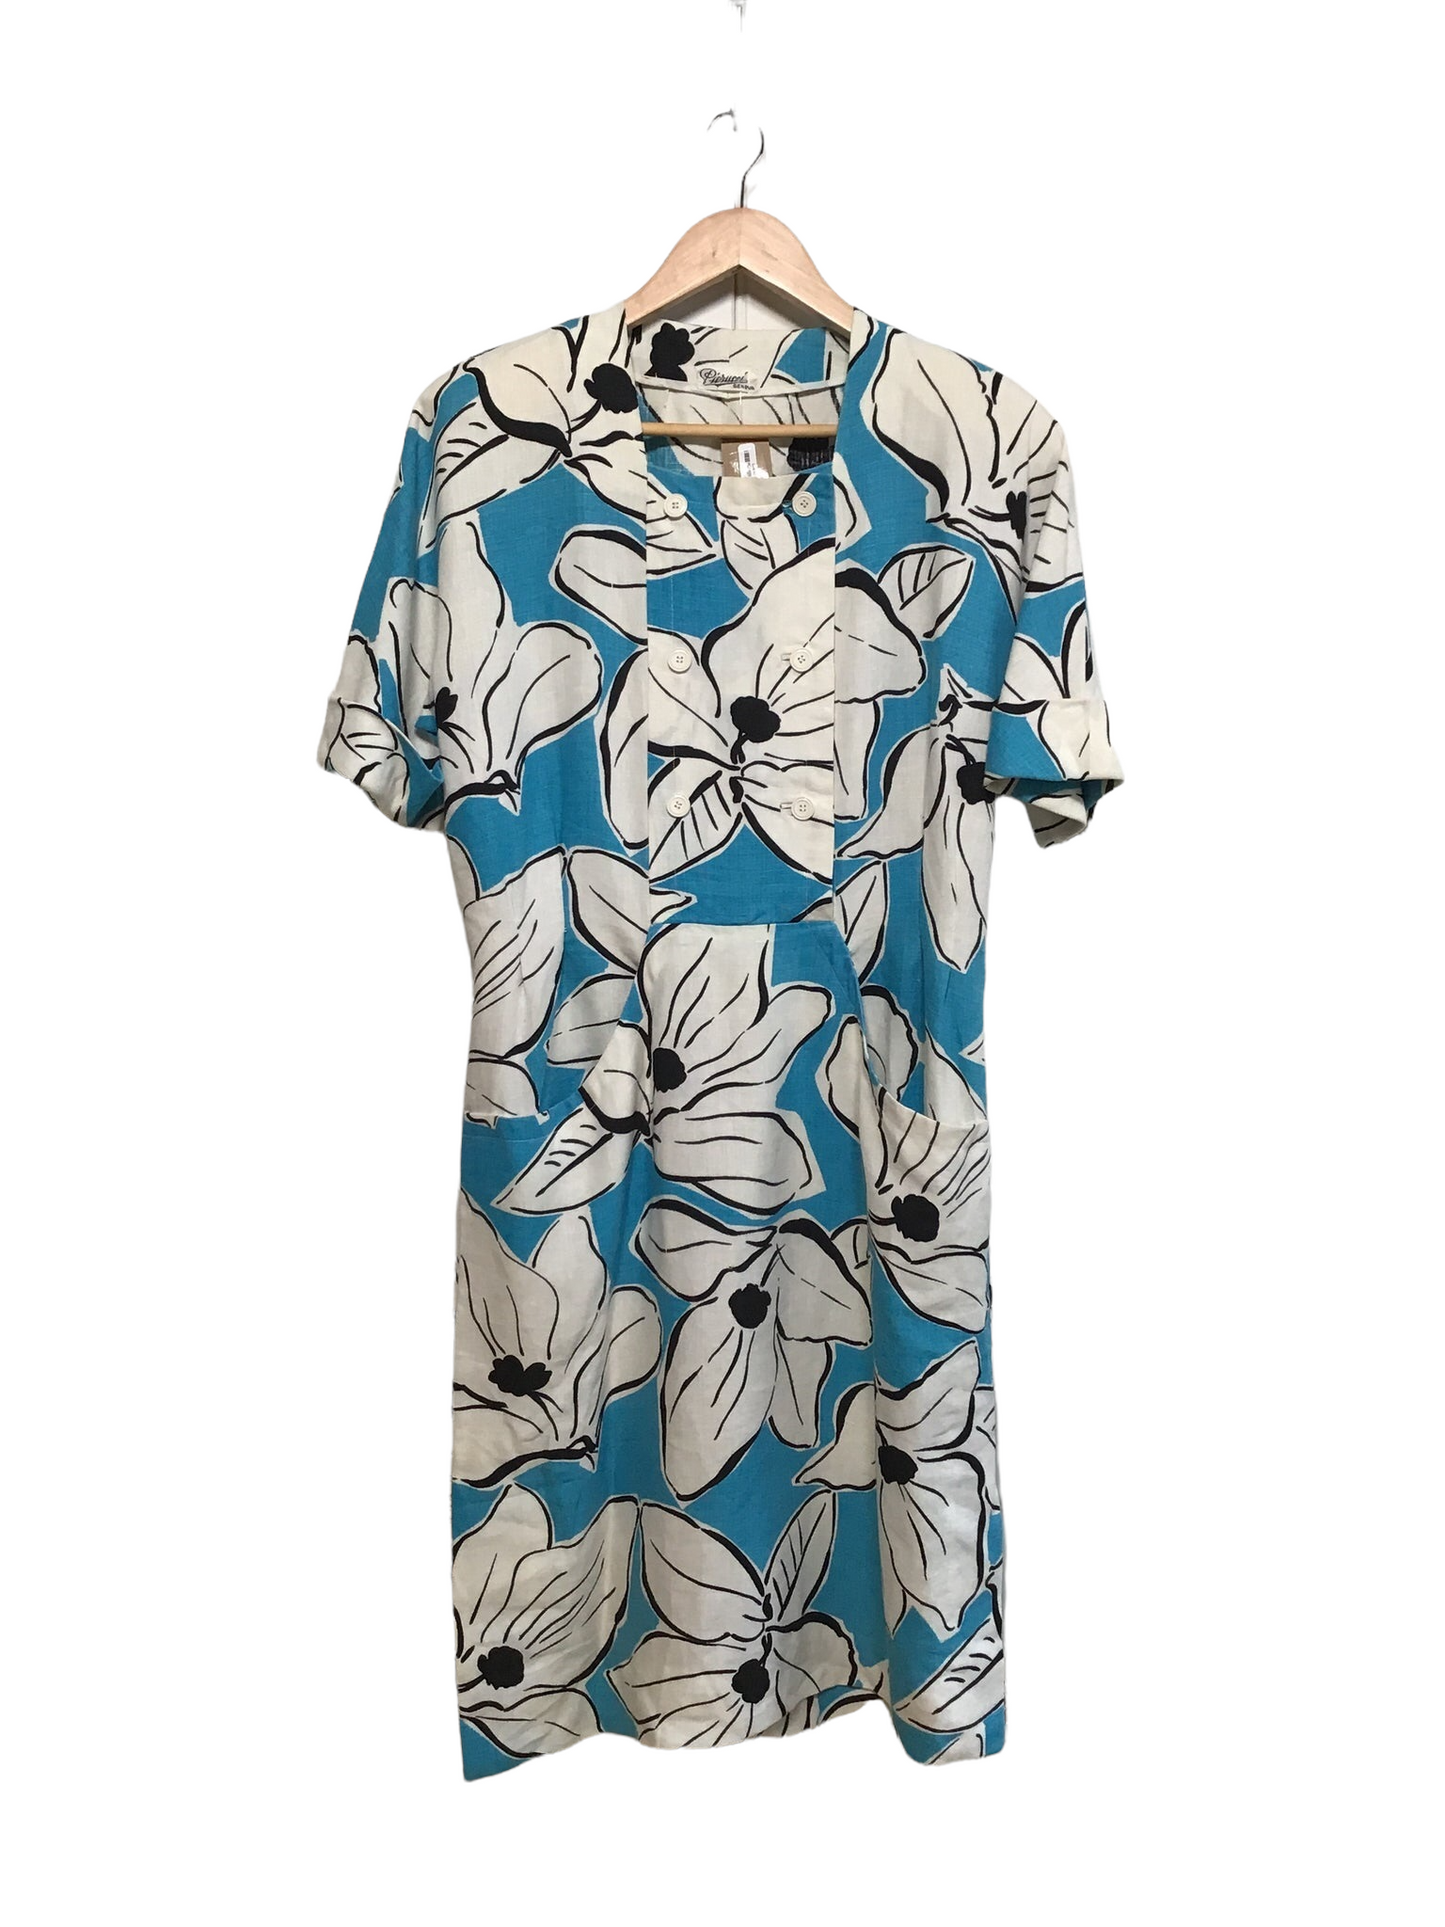 Pierucci Floral Summer Dress (Size L)